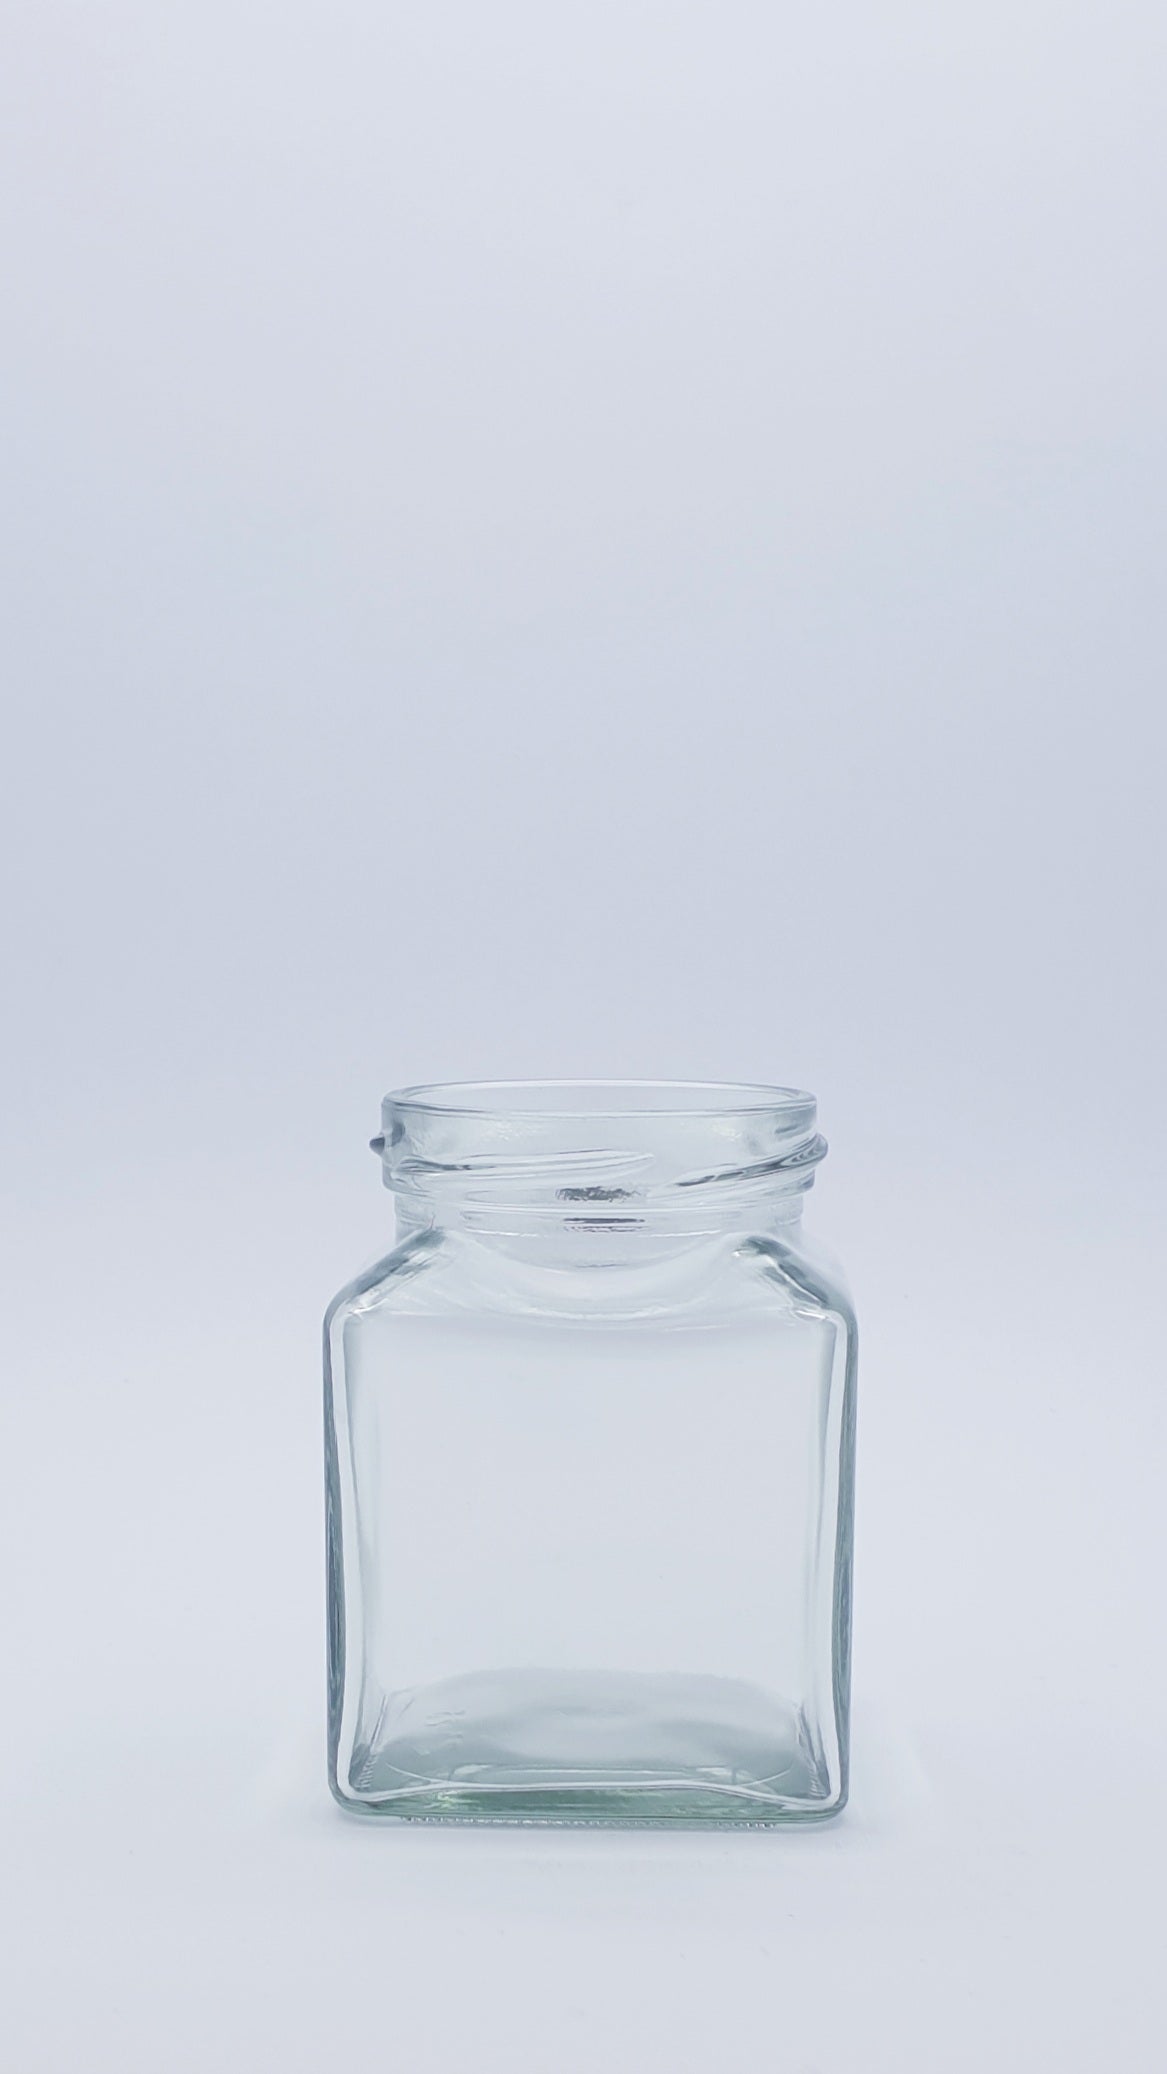 190ml Square Glass Jar 58mm Twist Cap - 48 Jars and Lids Per Carton - Unit Cost $1.48c Each (Jar/Lidcombo)